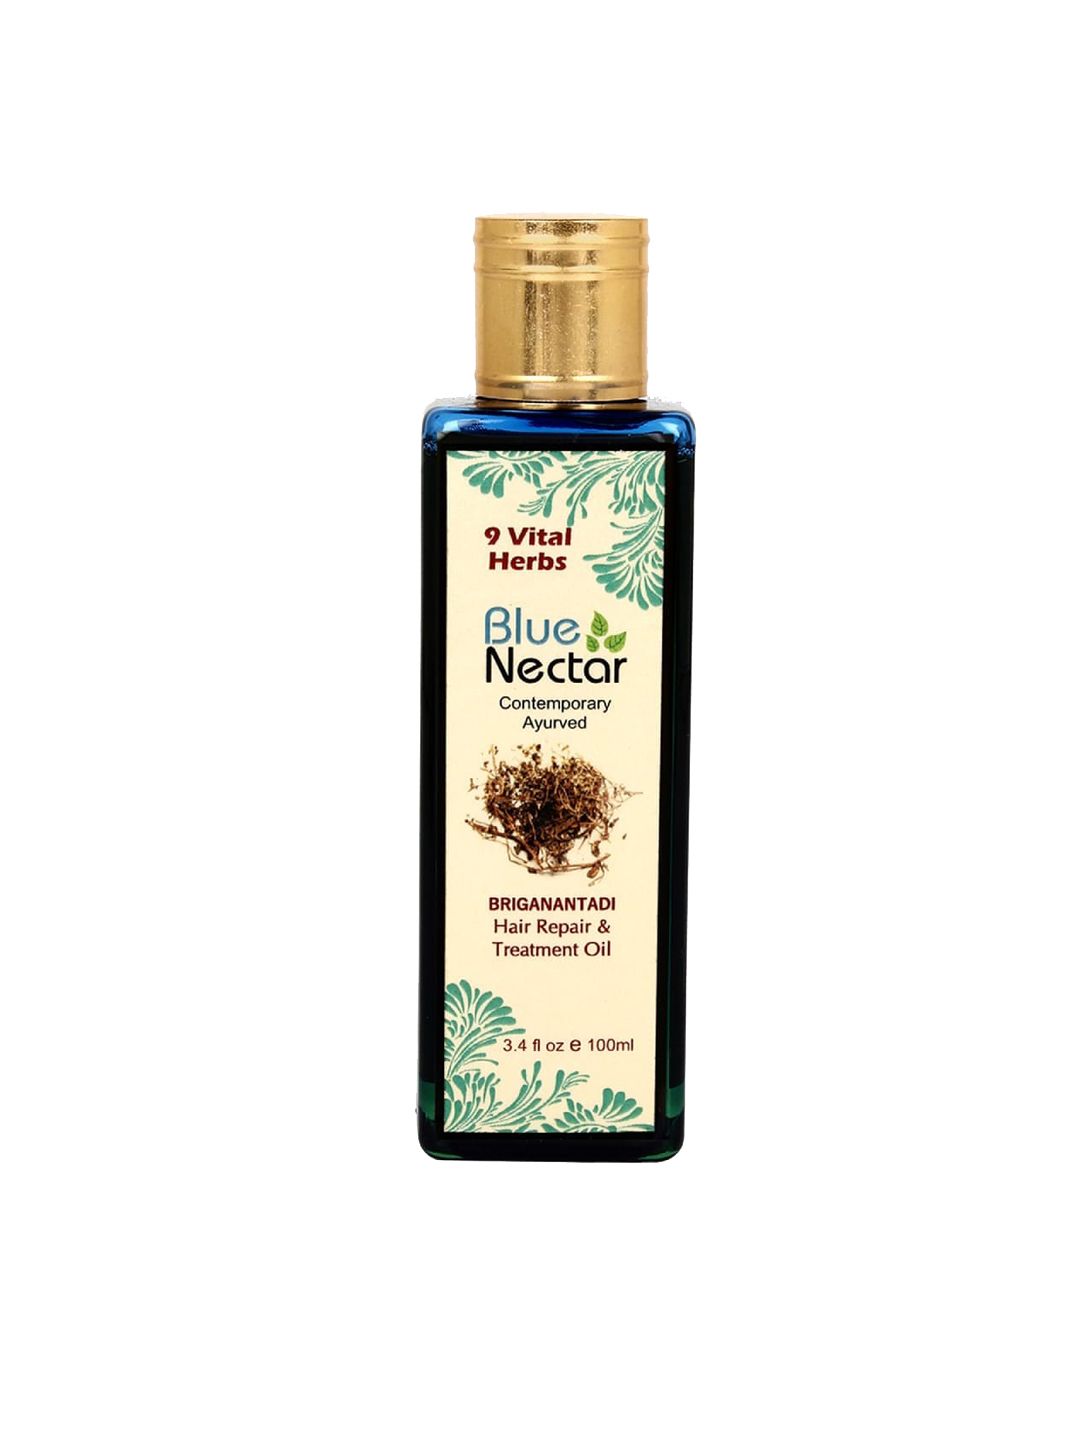 Blue Nectar Briganantadi Hair Repair & Treatment Oil 9 Herbs - 100 ml Price in India